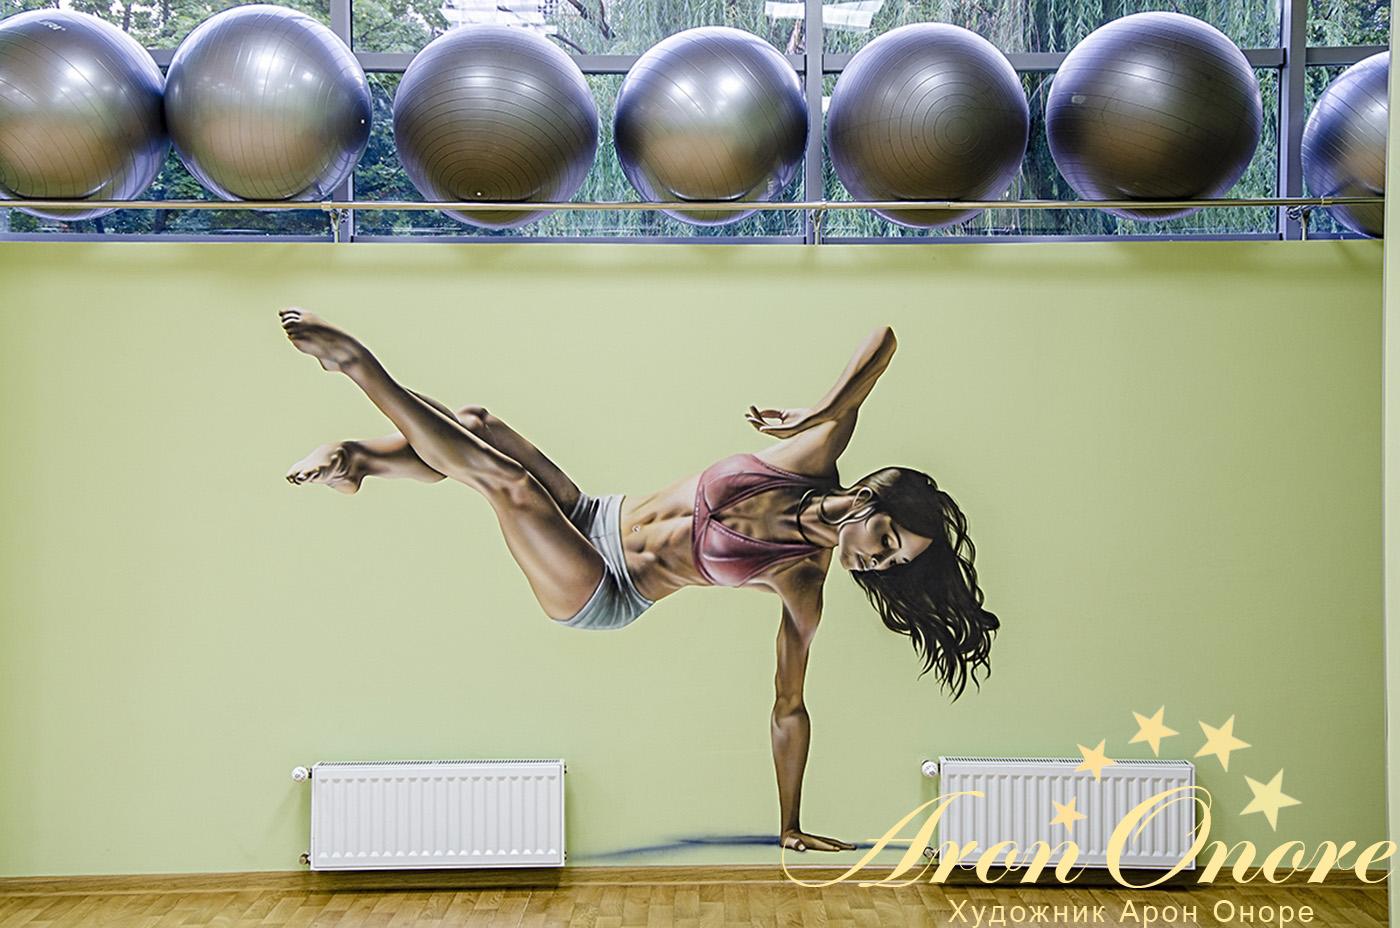 Рисунок на стене спортивного клуба - девушка стоит на руке